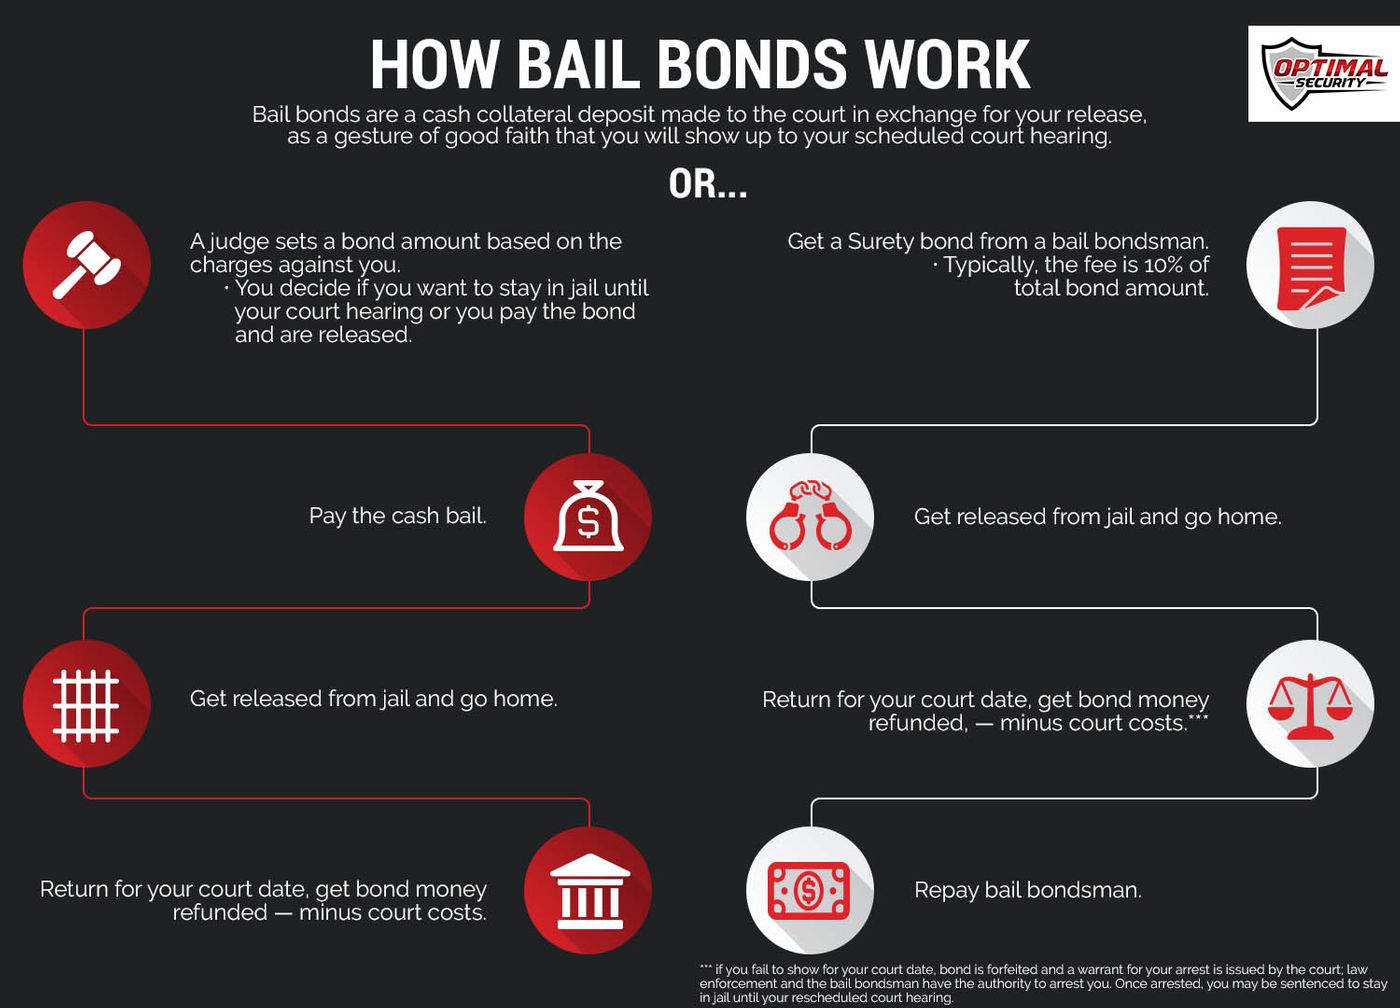 How-Bail-Bonds-Work-Infographic-5b1174cd27d00.jpg